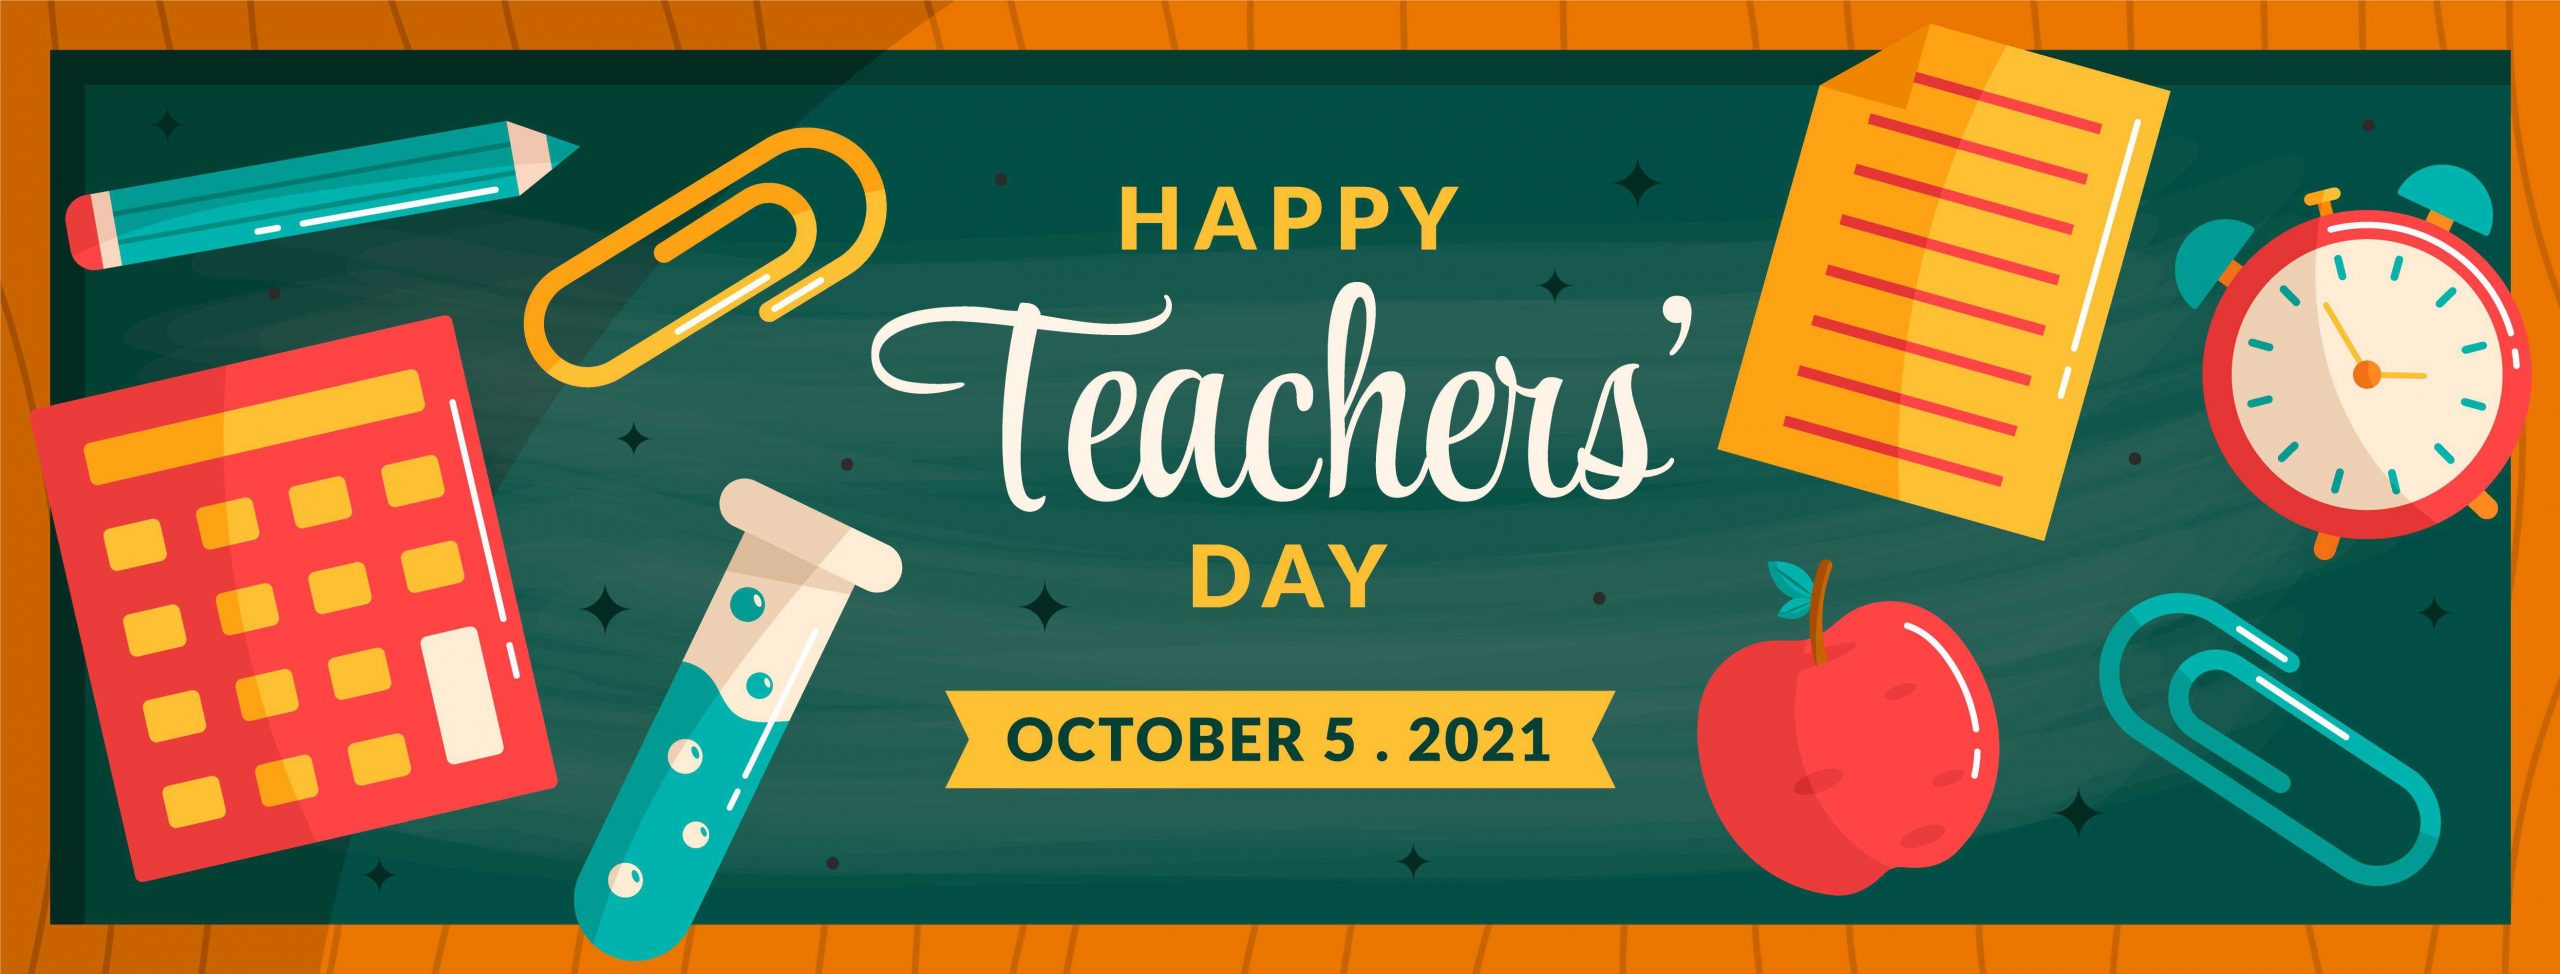 Happy Teacher's Day photo download